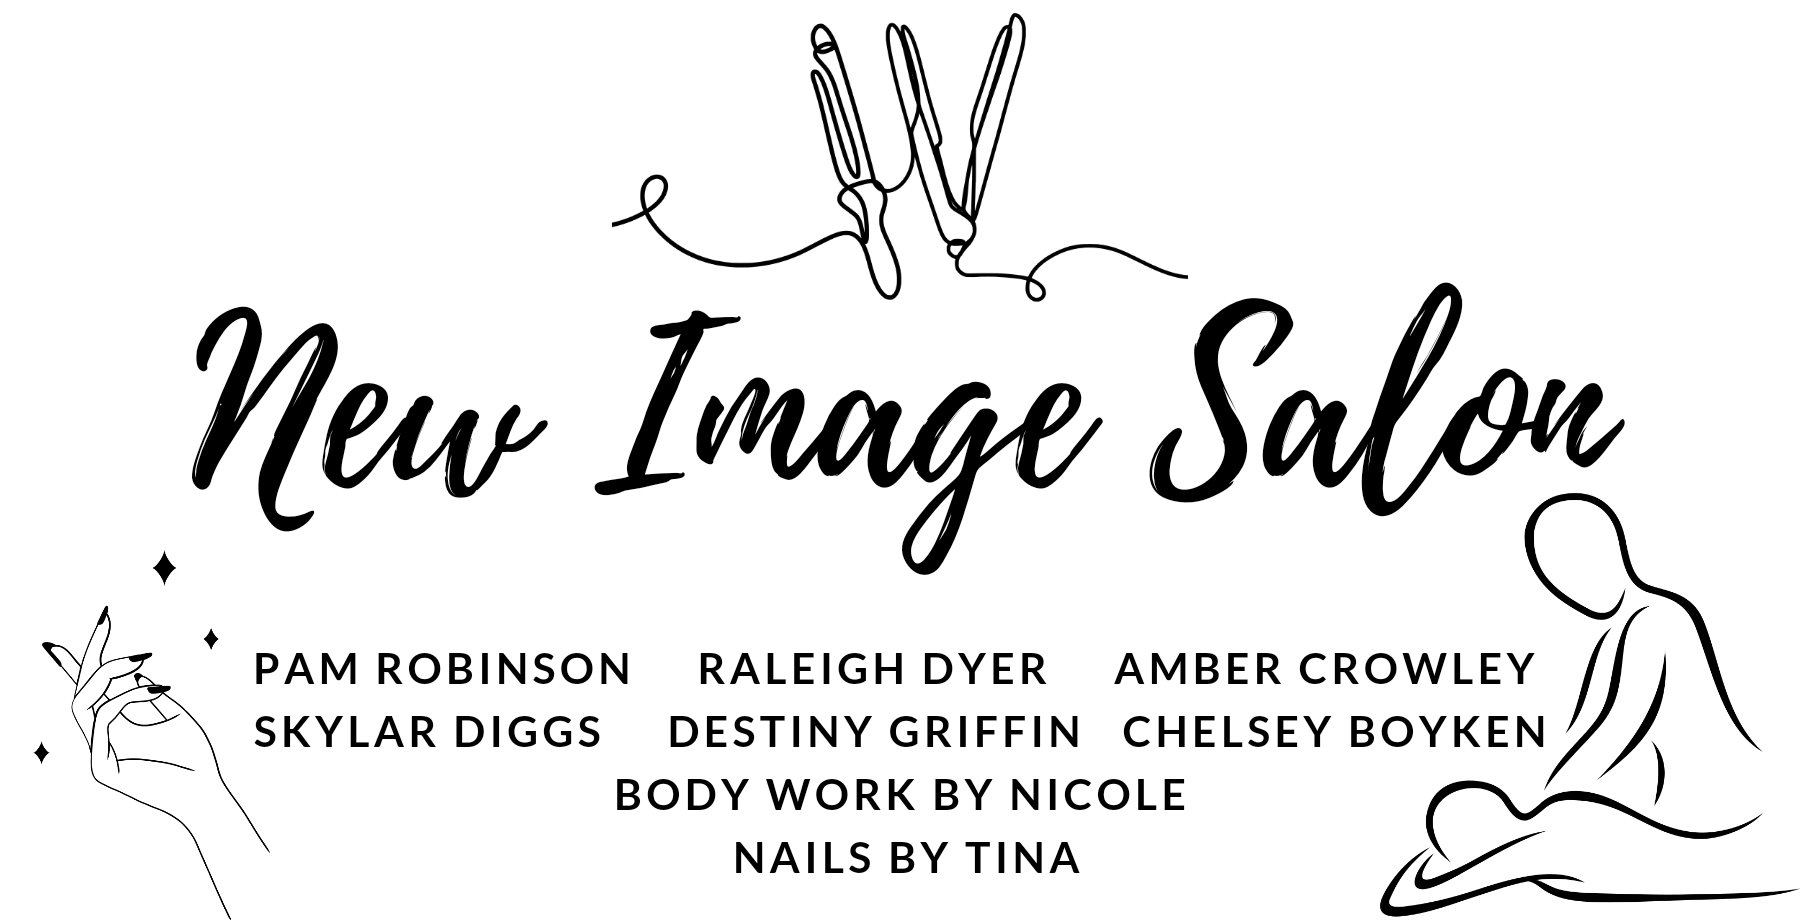 New Image Salon 14 Rolling Hills Rd, Cedartown Georgia 30125